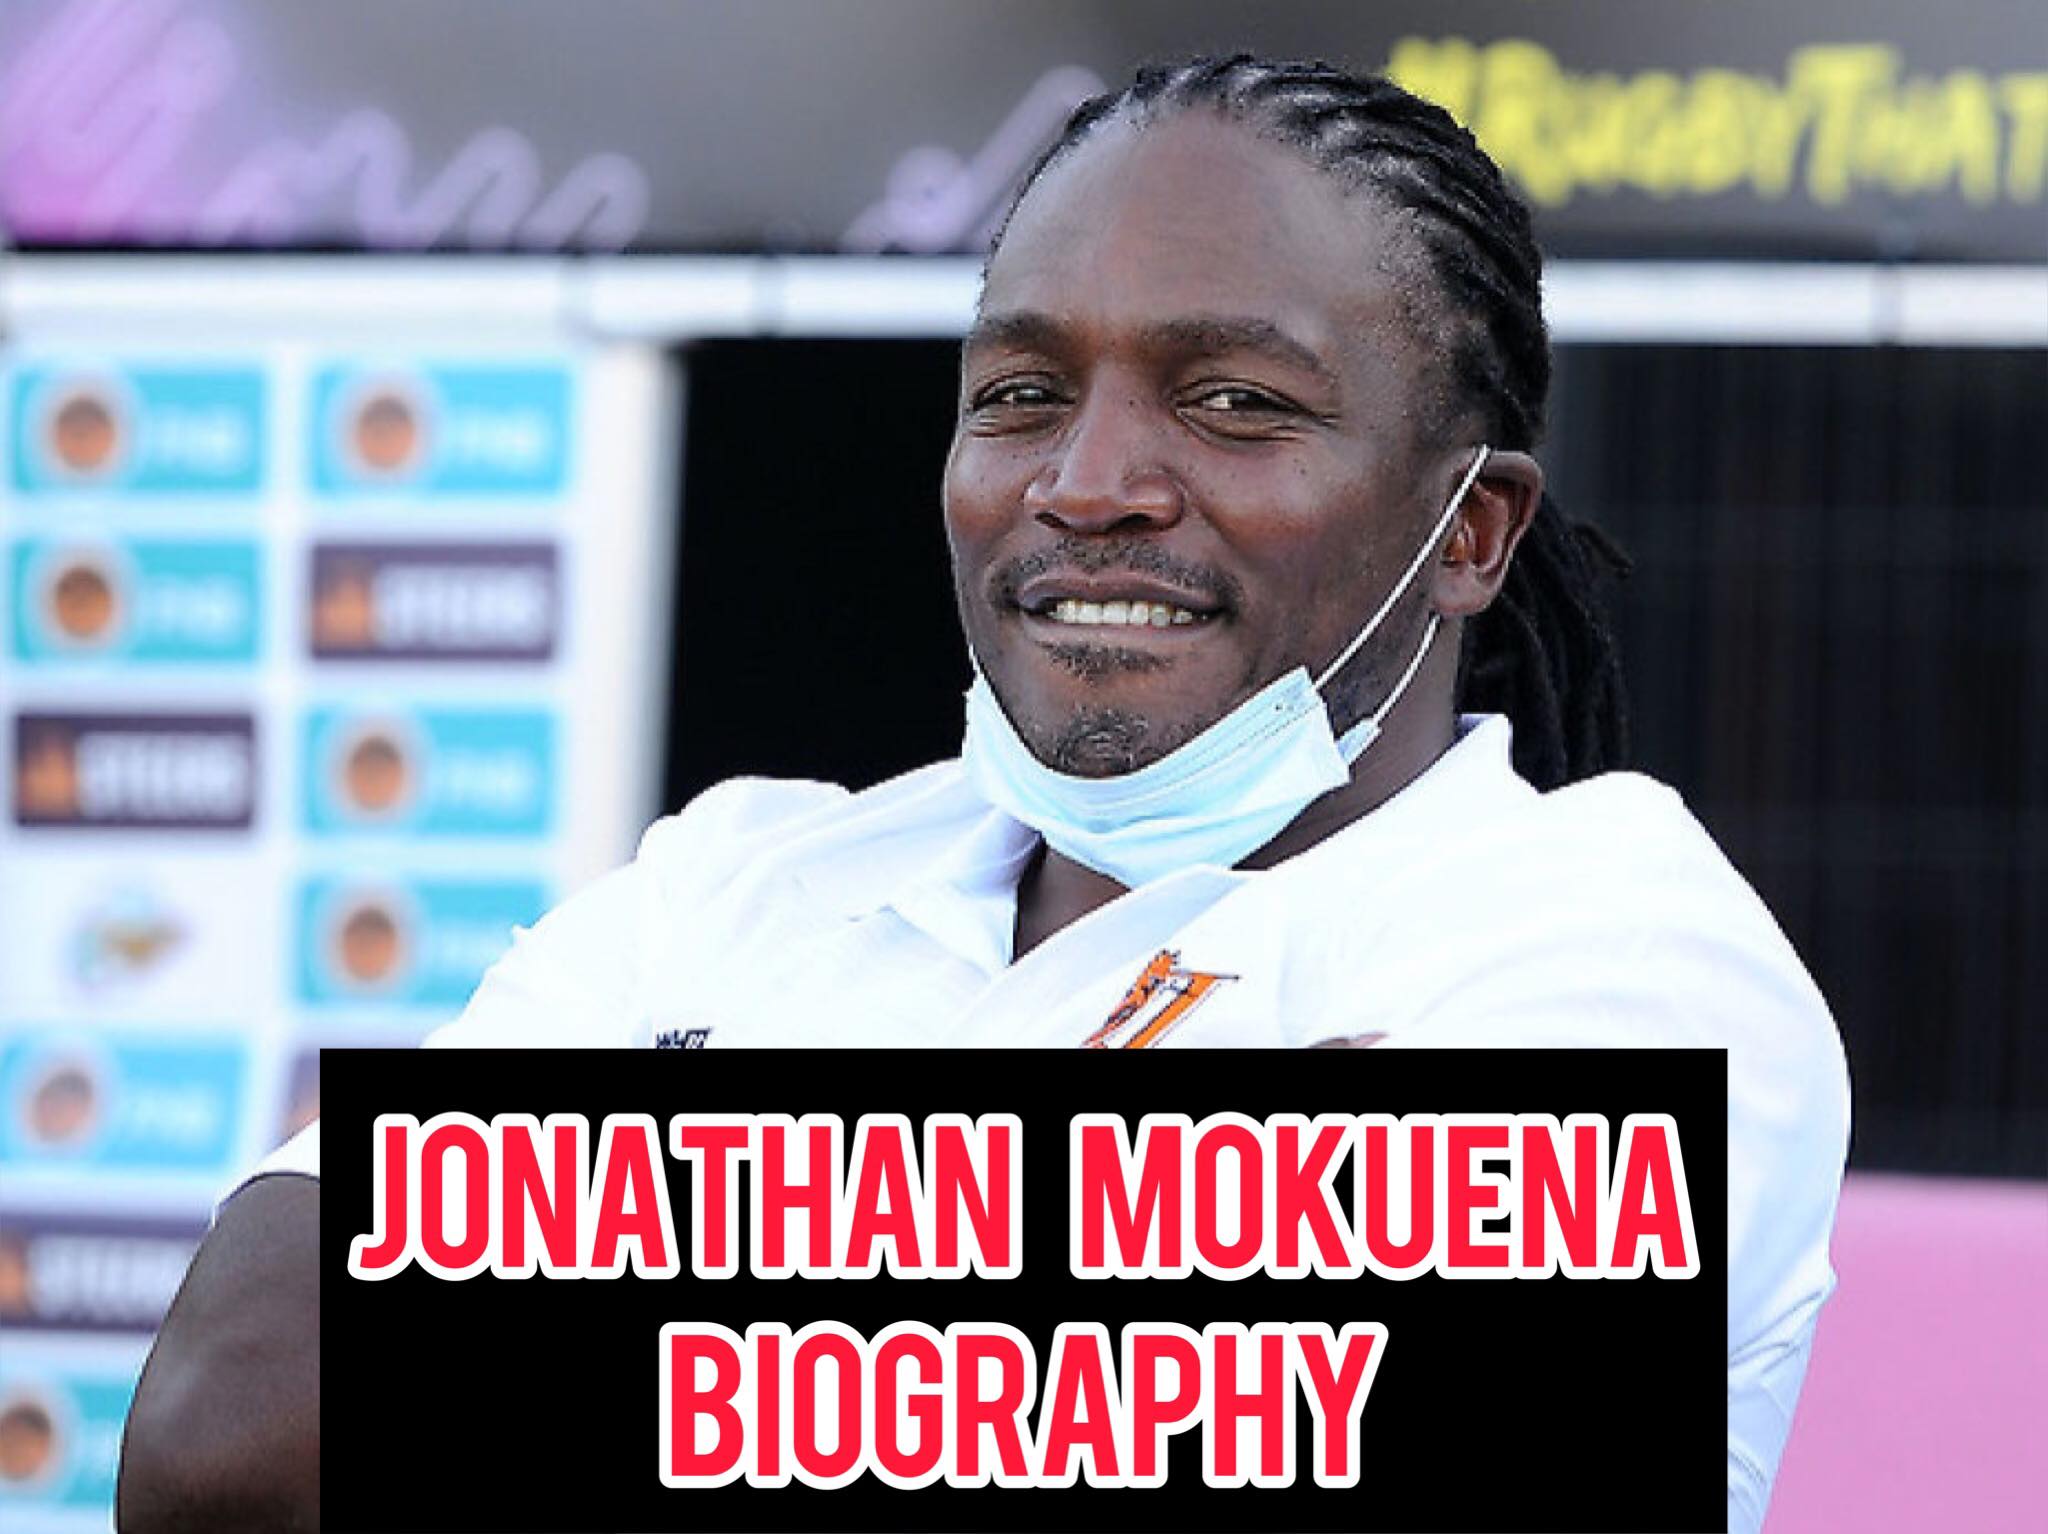 Jonathan Mokuena Biography